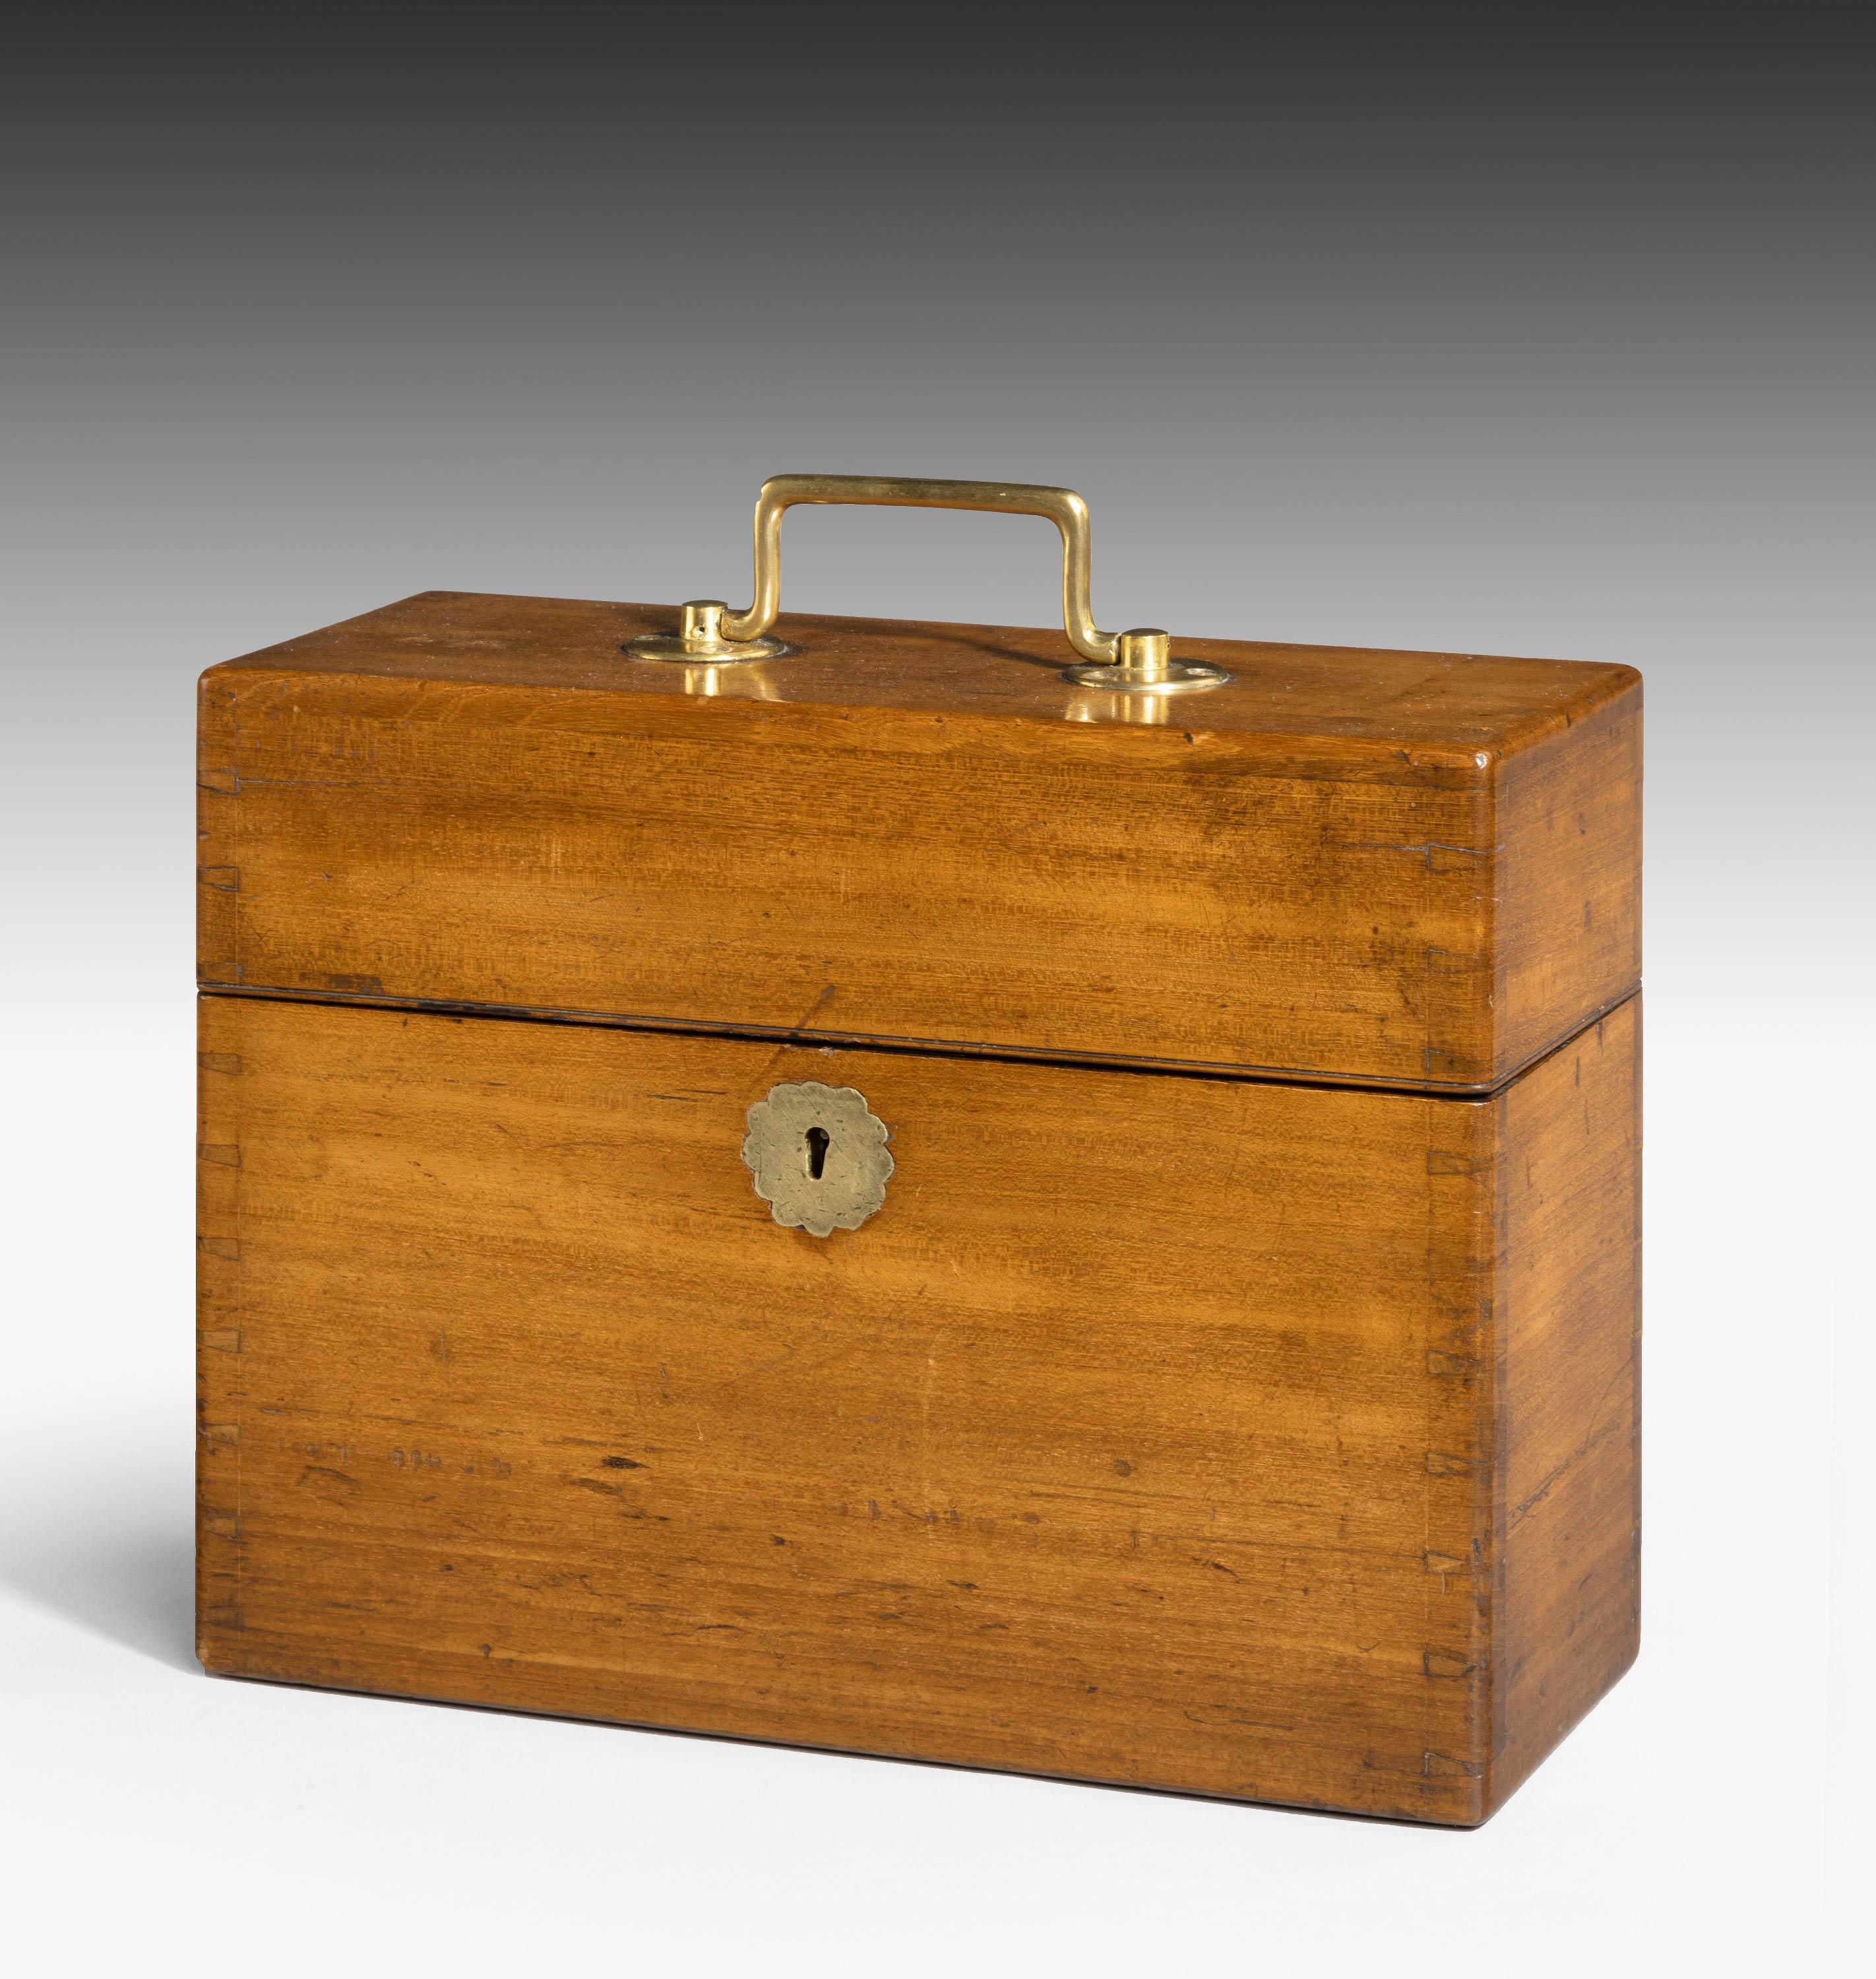 English Late George III Period Travelling Box